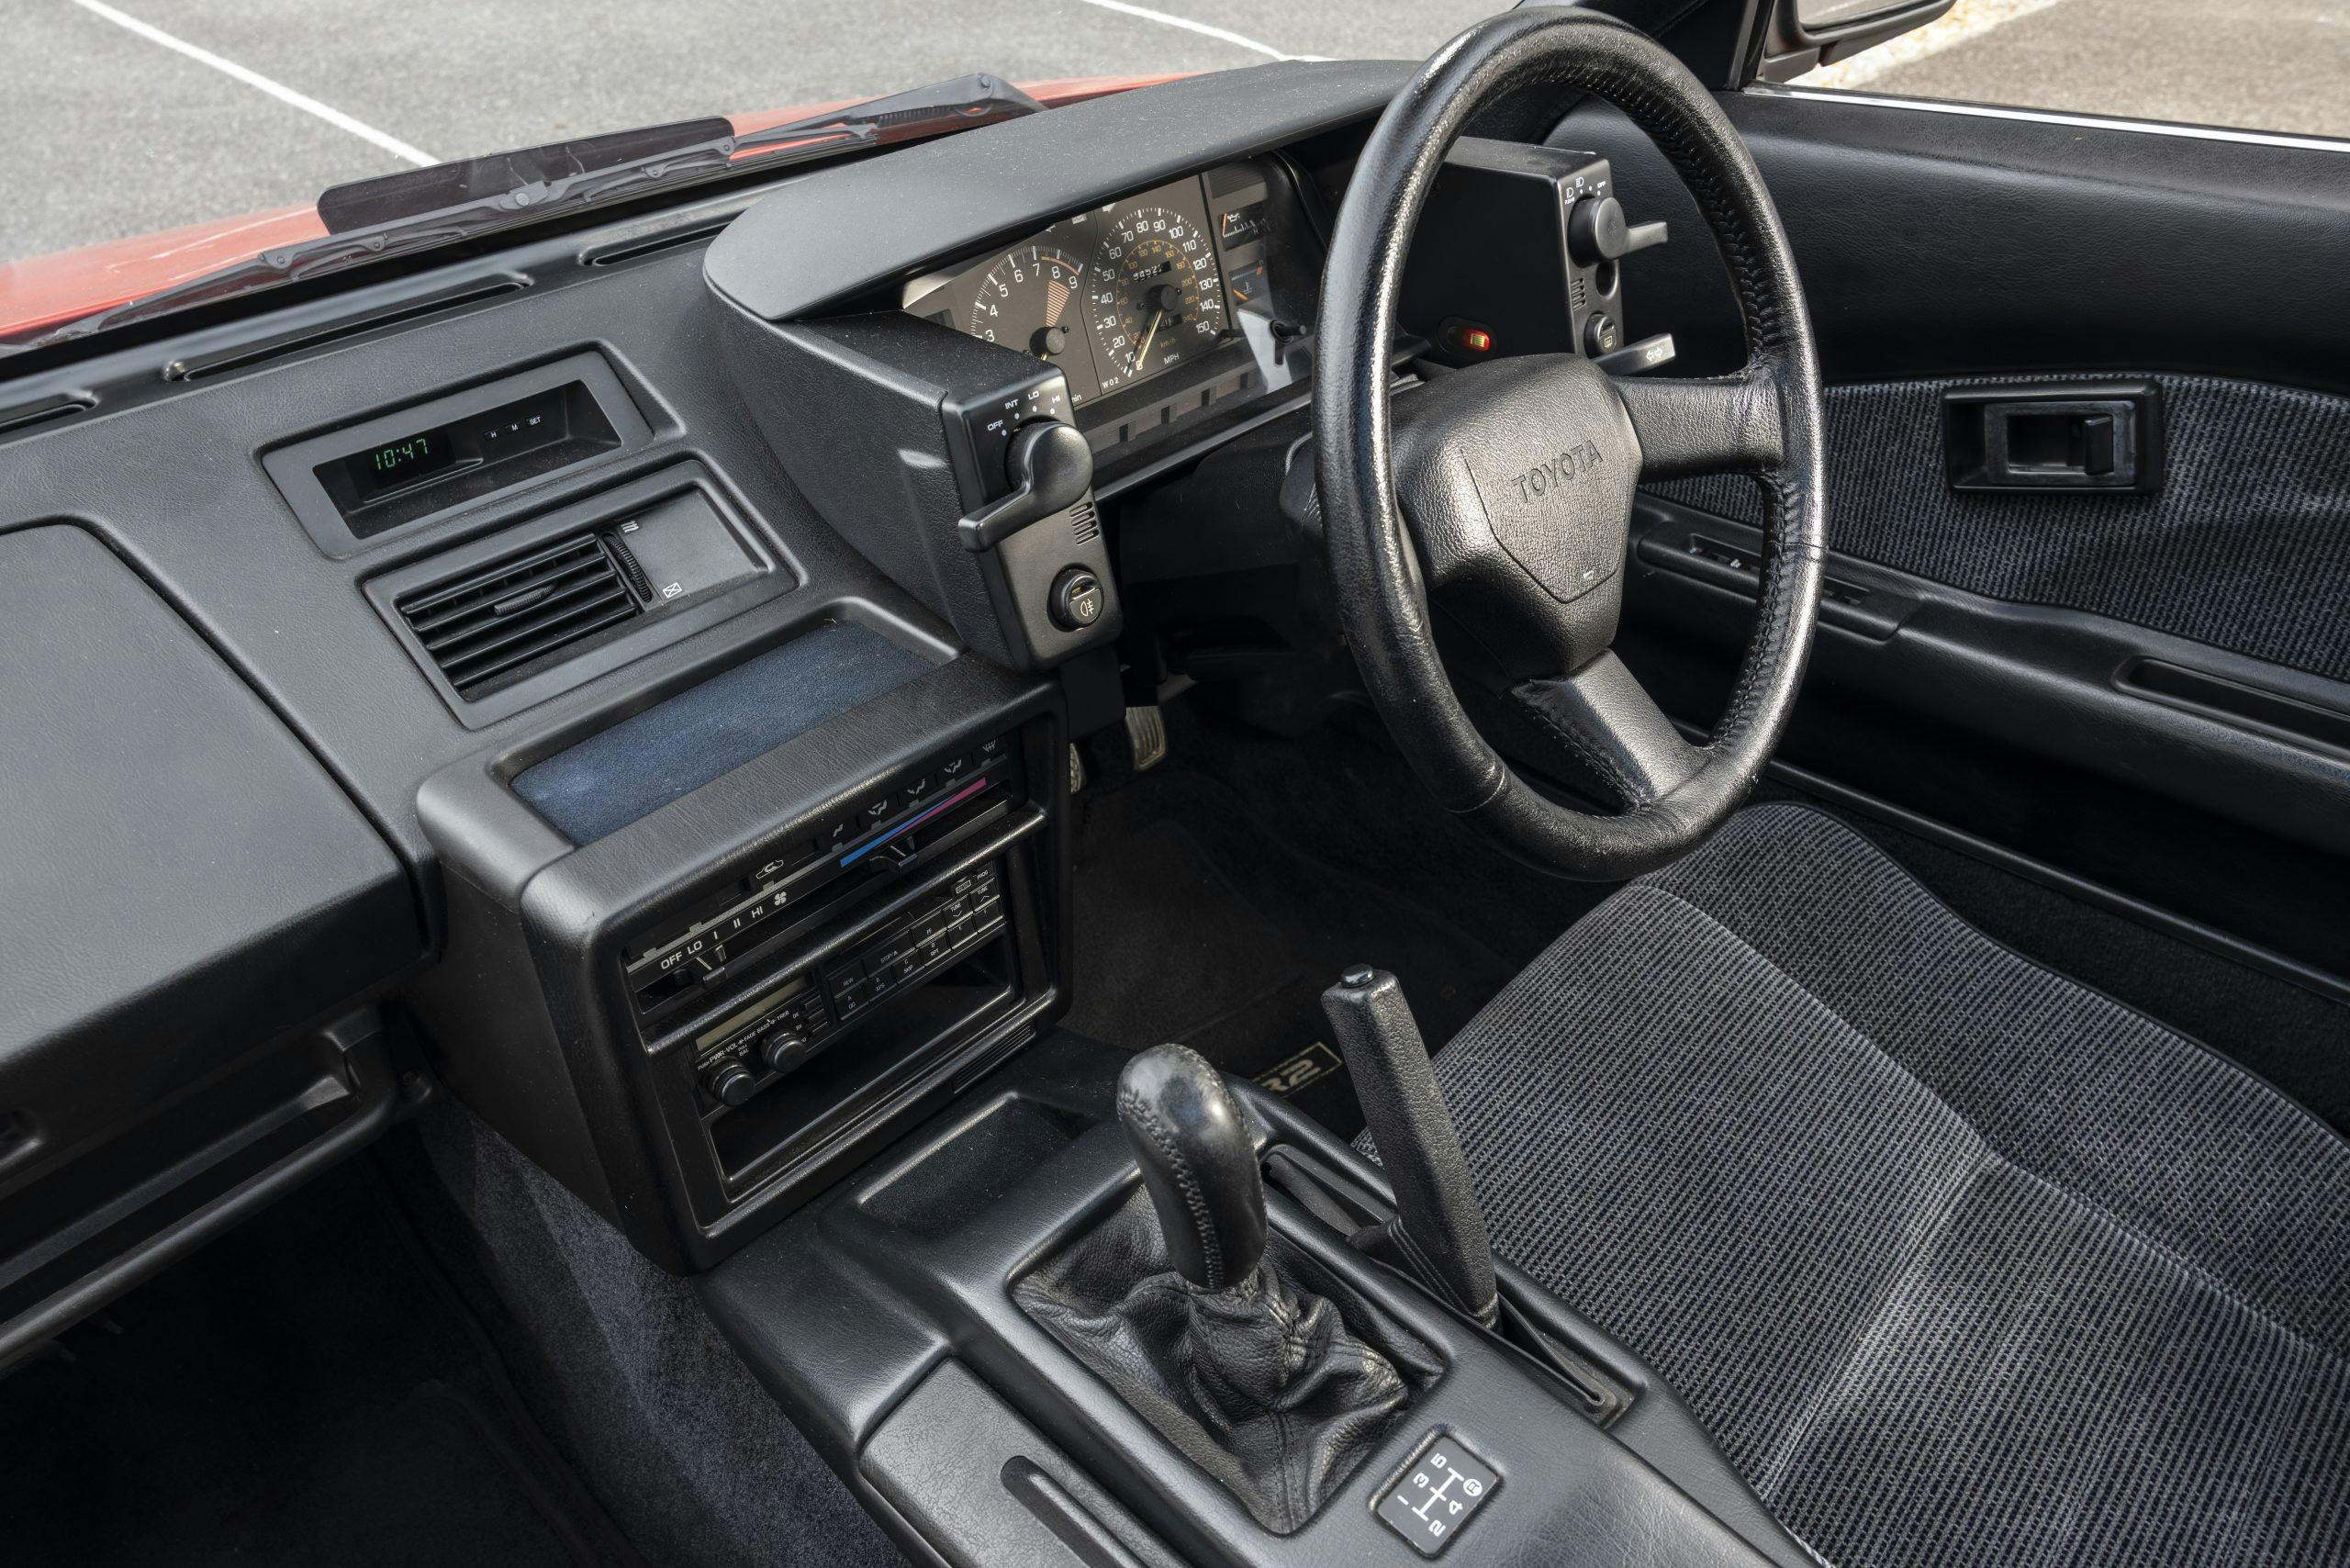 Toyota MR2 interior front angle